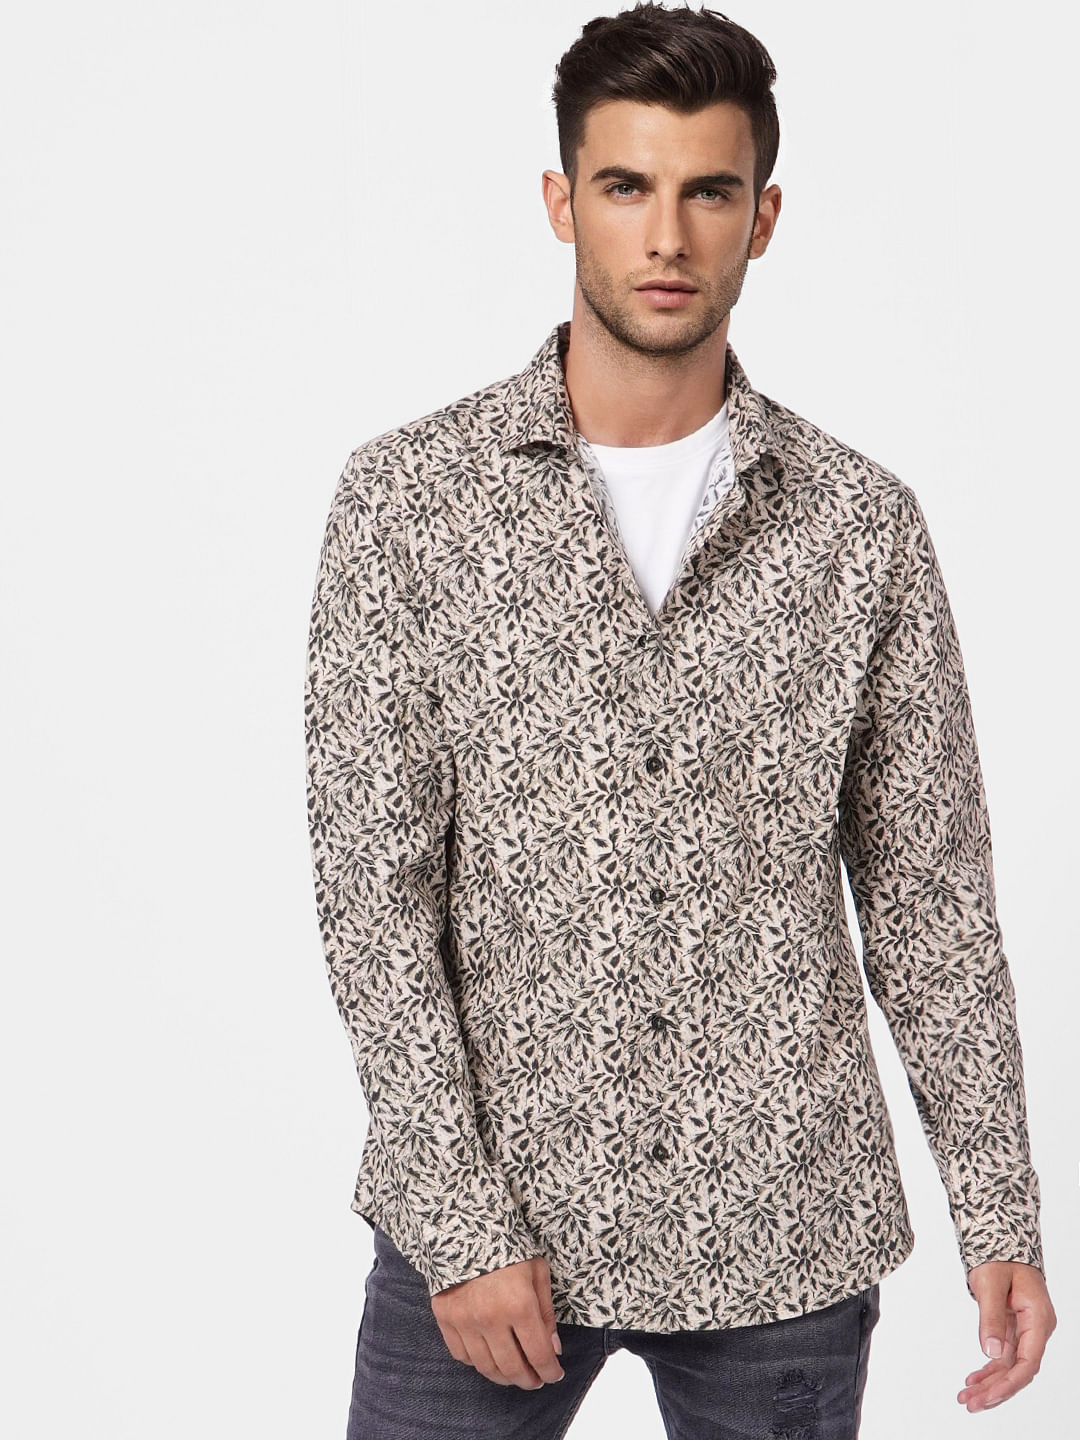 Men's floral shirt- Floral pattern men's shirt- Men's long sleeve floral  shirt|WAM DENIM